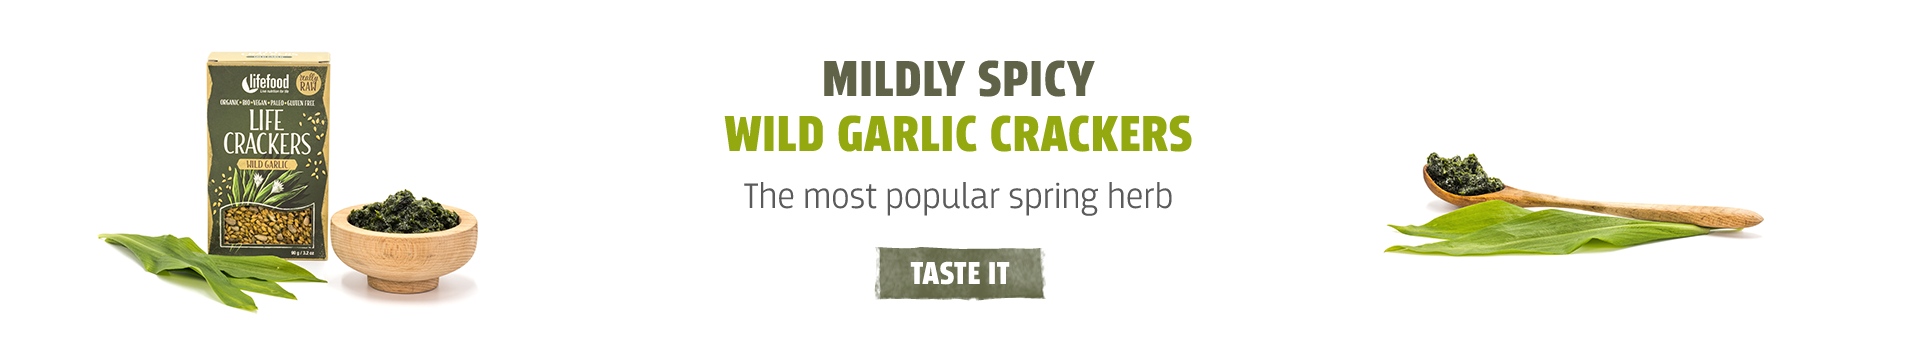 wild garlic crackers